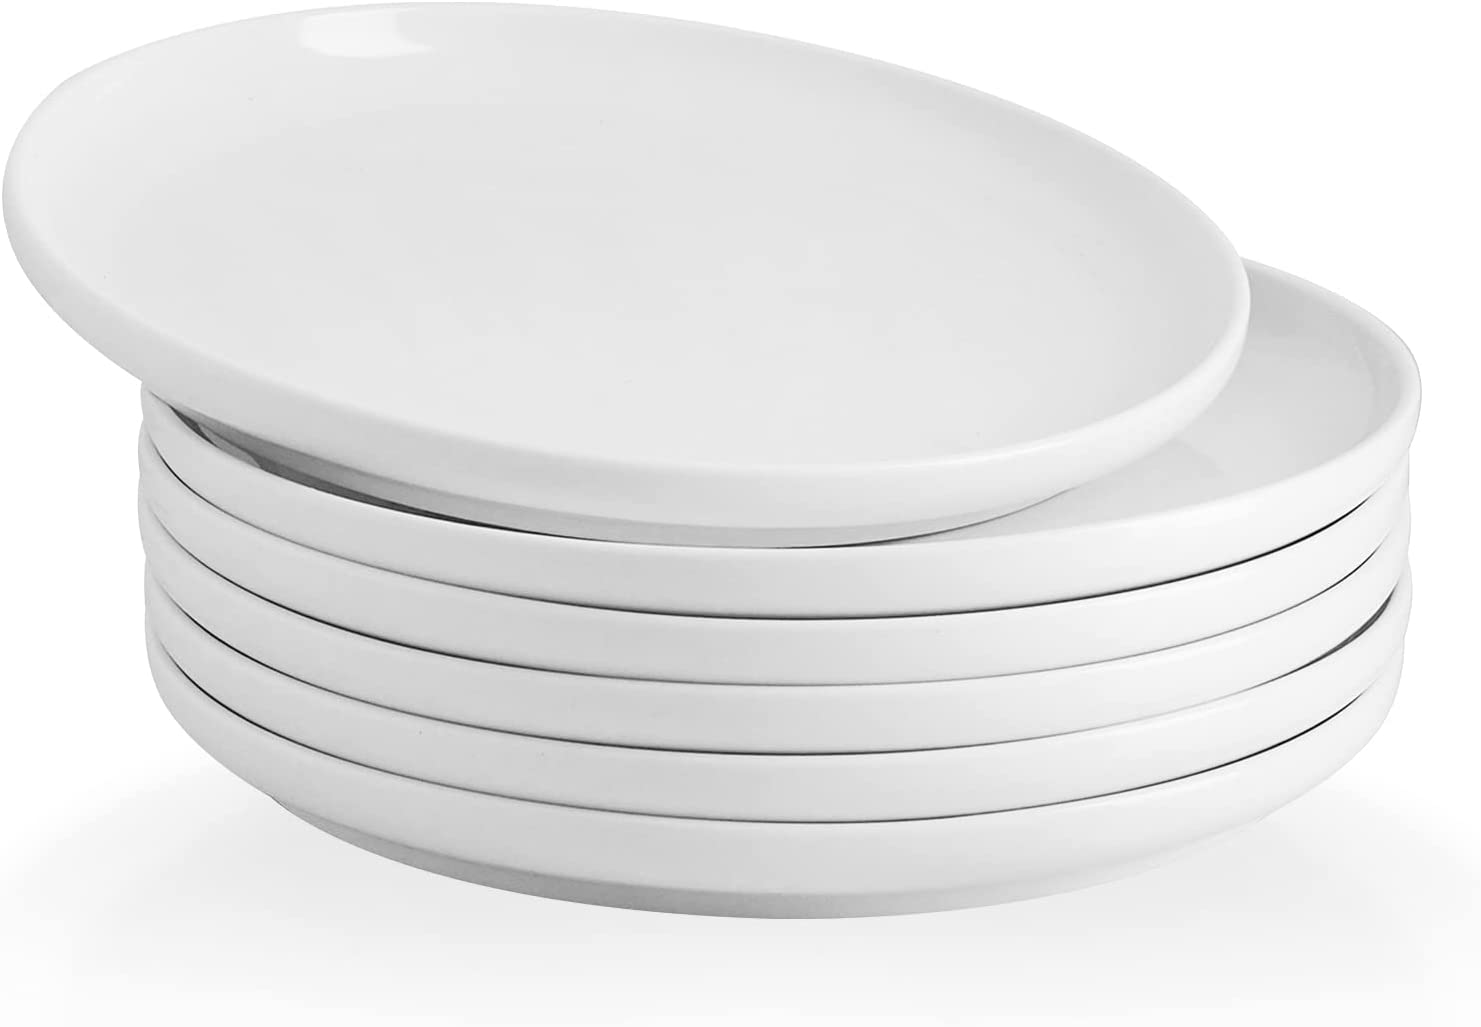 Kanwone Freezer Safe Porcelain Salad Plates, 6-Count